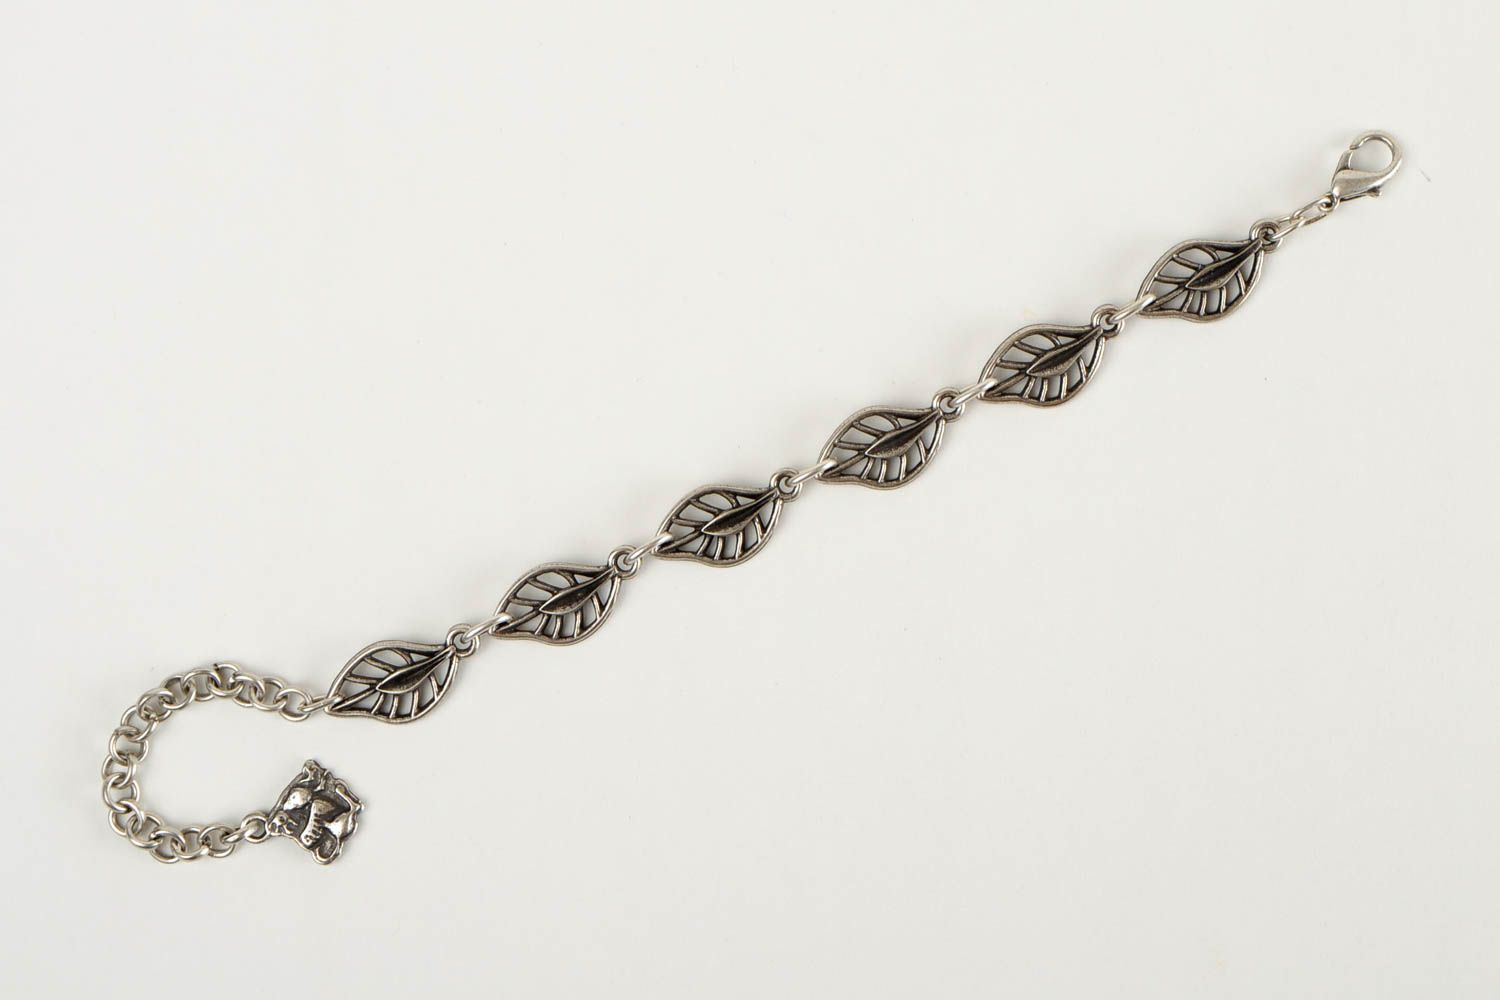 Unusual handmade metal bracelet metal jewelry designs stylish gifts for her photo 3